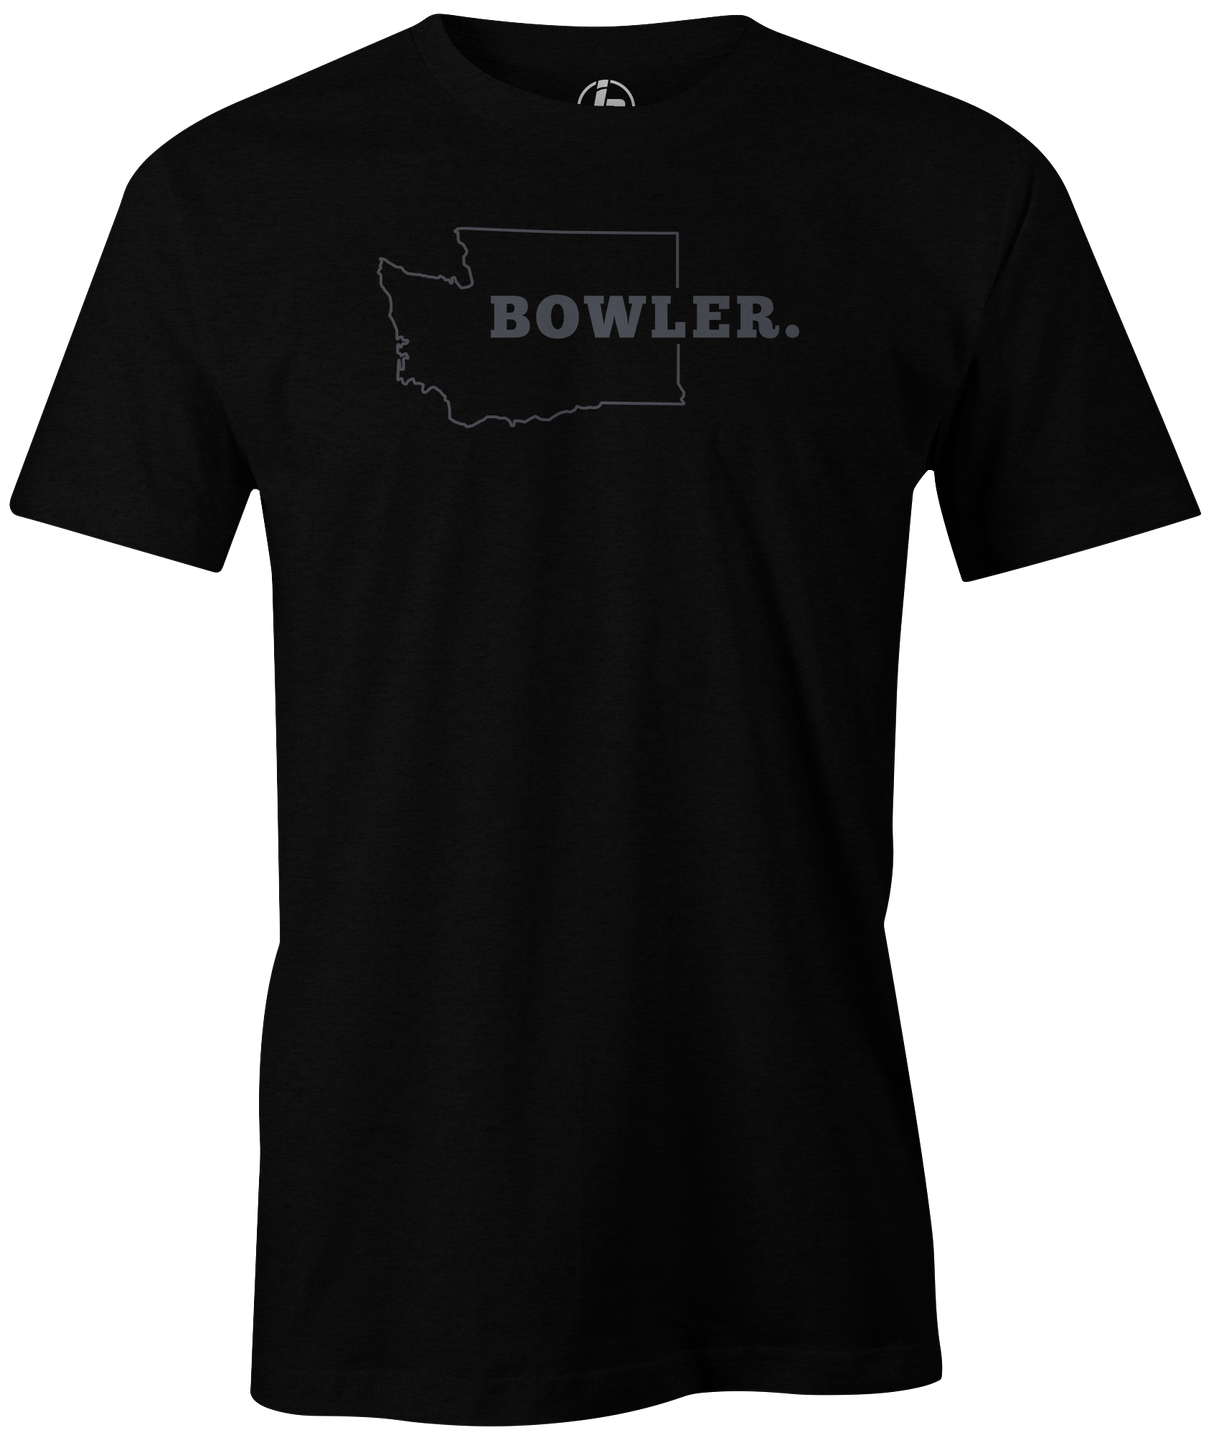 Washington Men's State Bowling T-shirt, Black, Cool, novelty, tshirt, tee, tee-shirt, tee shirt, teeshirt, team, comfortable